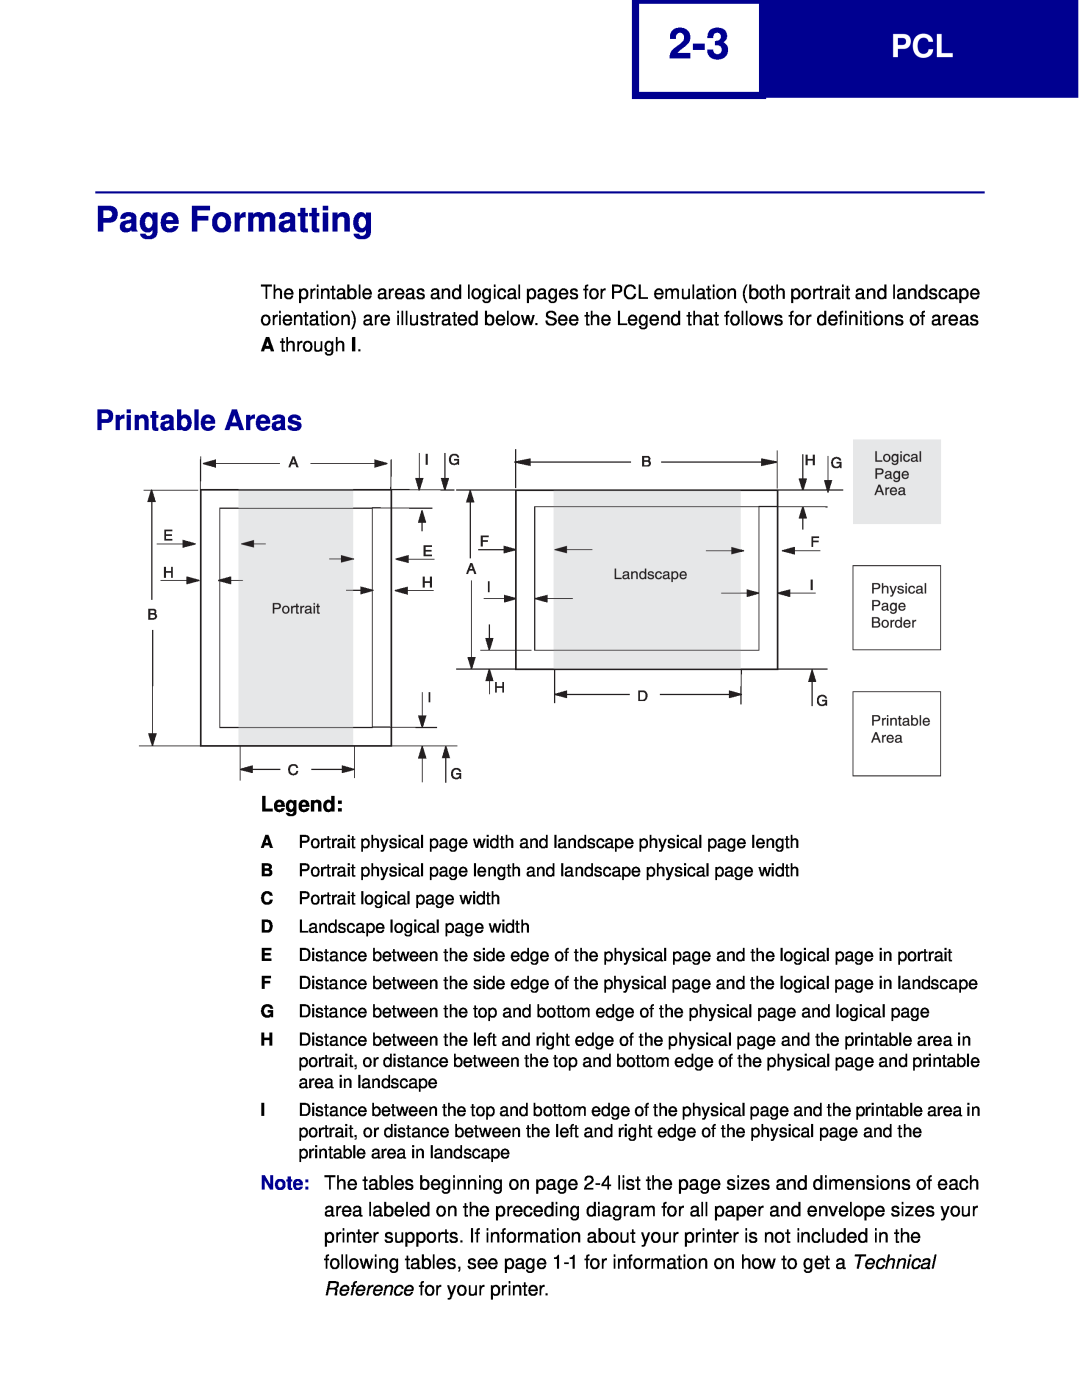 Lexmark C762, C760 manual Page Formatting, Printable Areas 